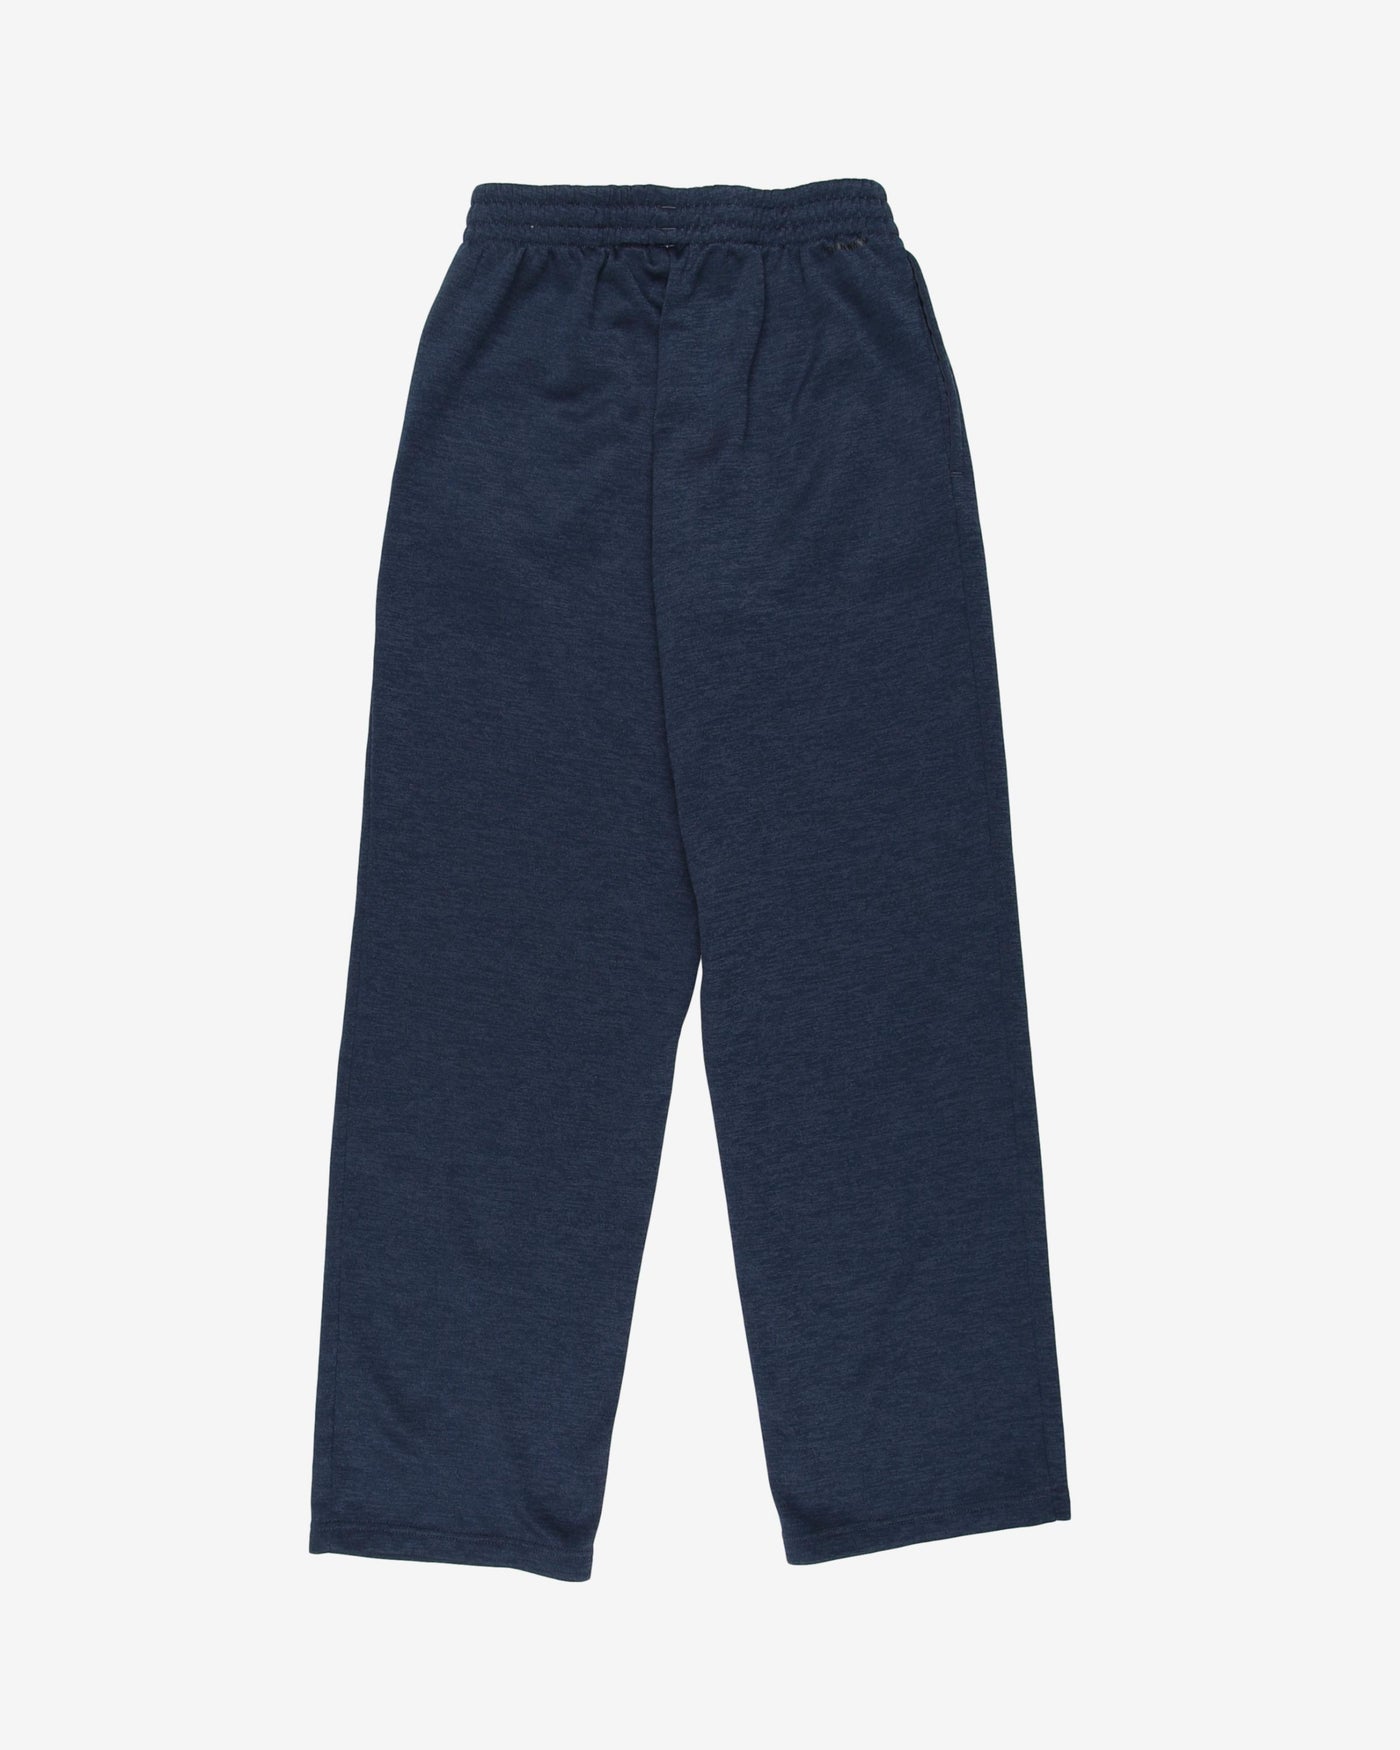 adidas blue sweatpants trousers - xs w24